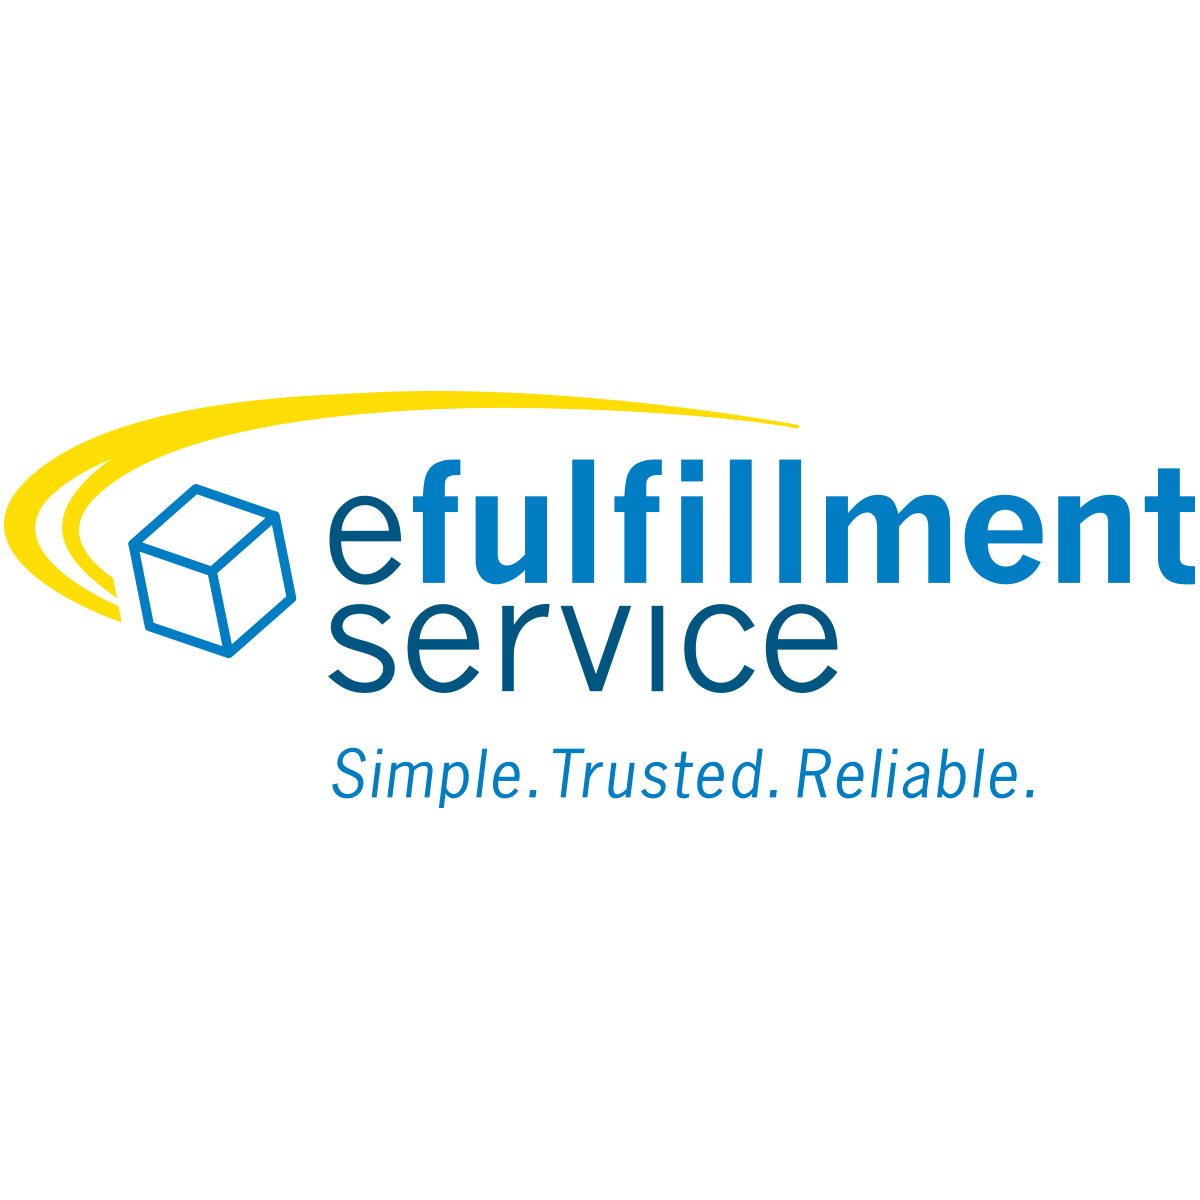 eFulfillment Service Order Fulfillment